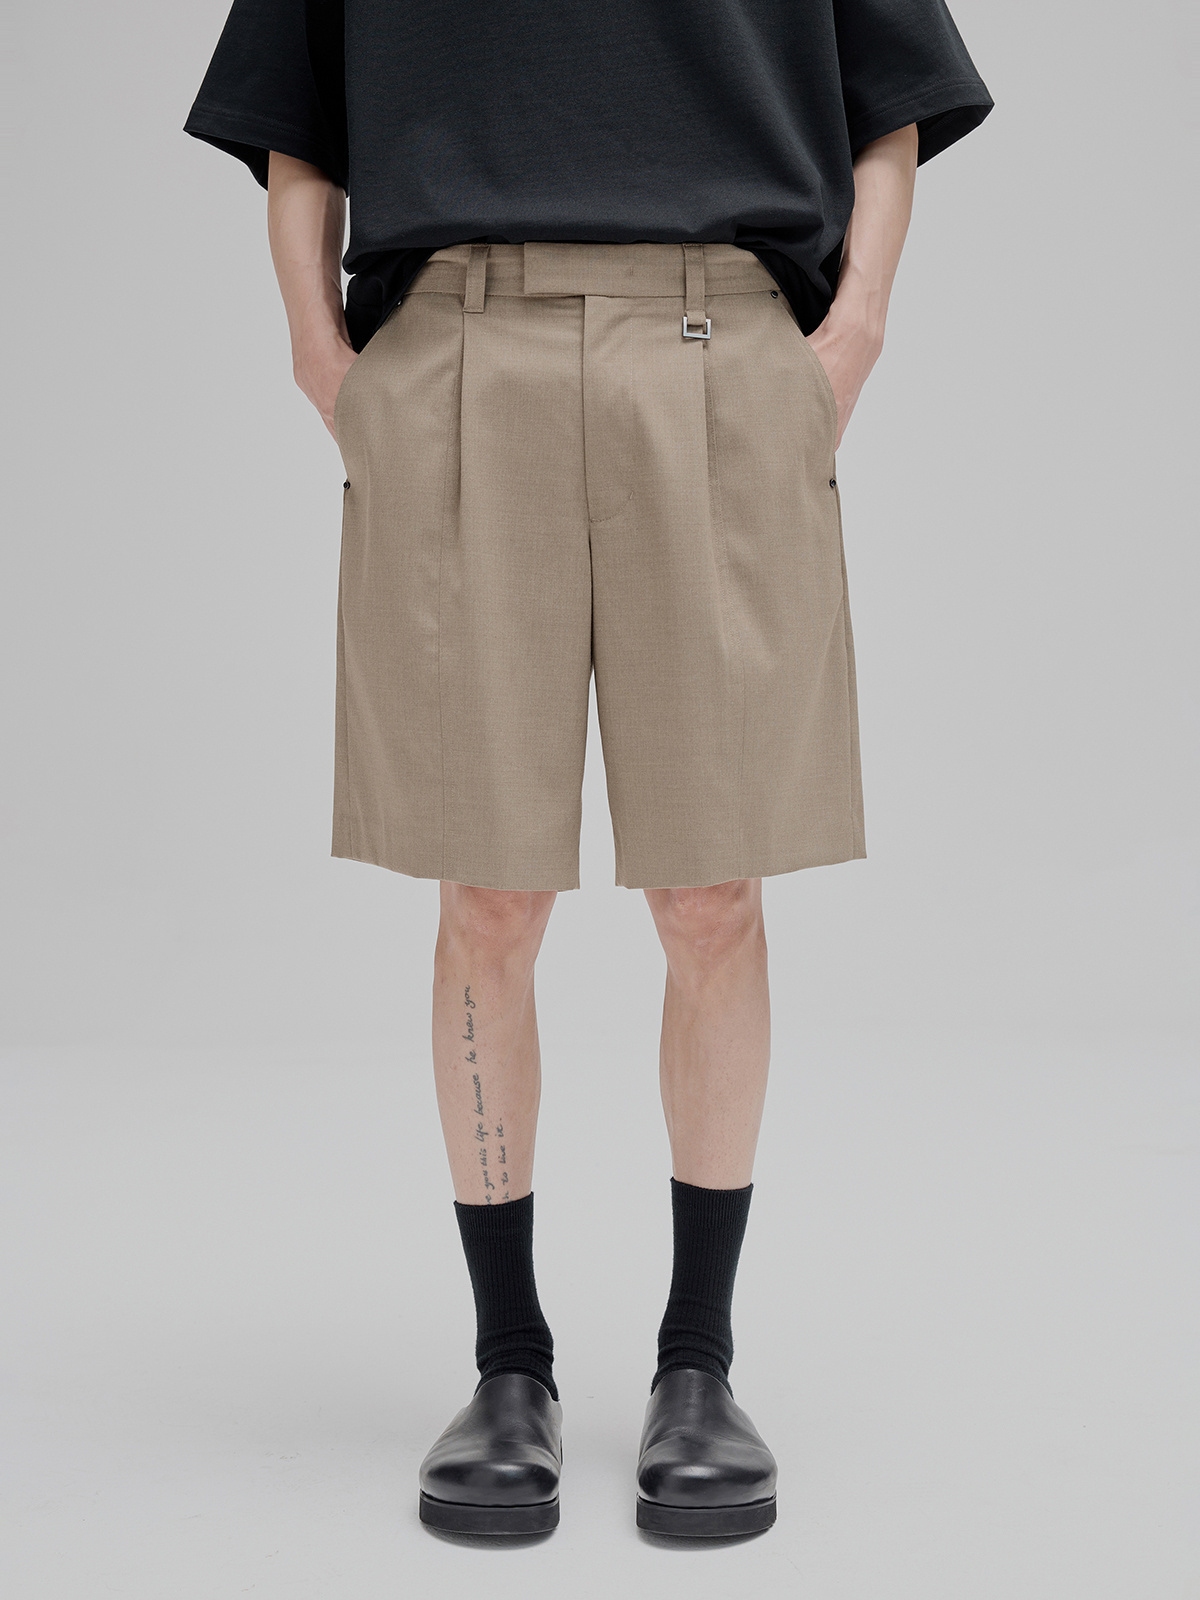 【NANS】“零”染纤维压线分割设计上叠单褶金属配饰点缀宽舒中裤